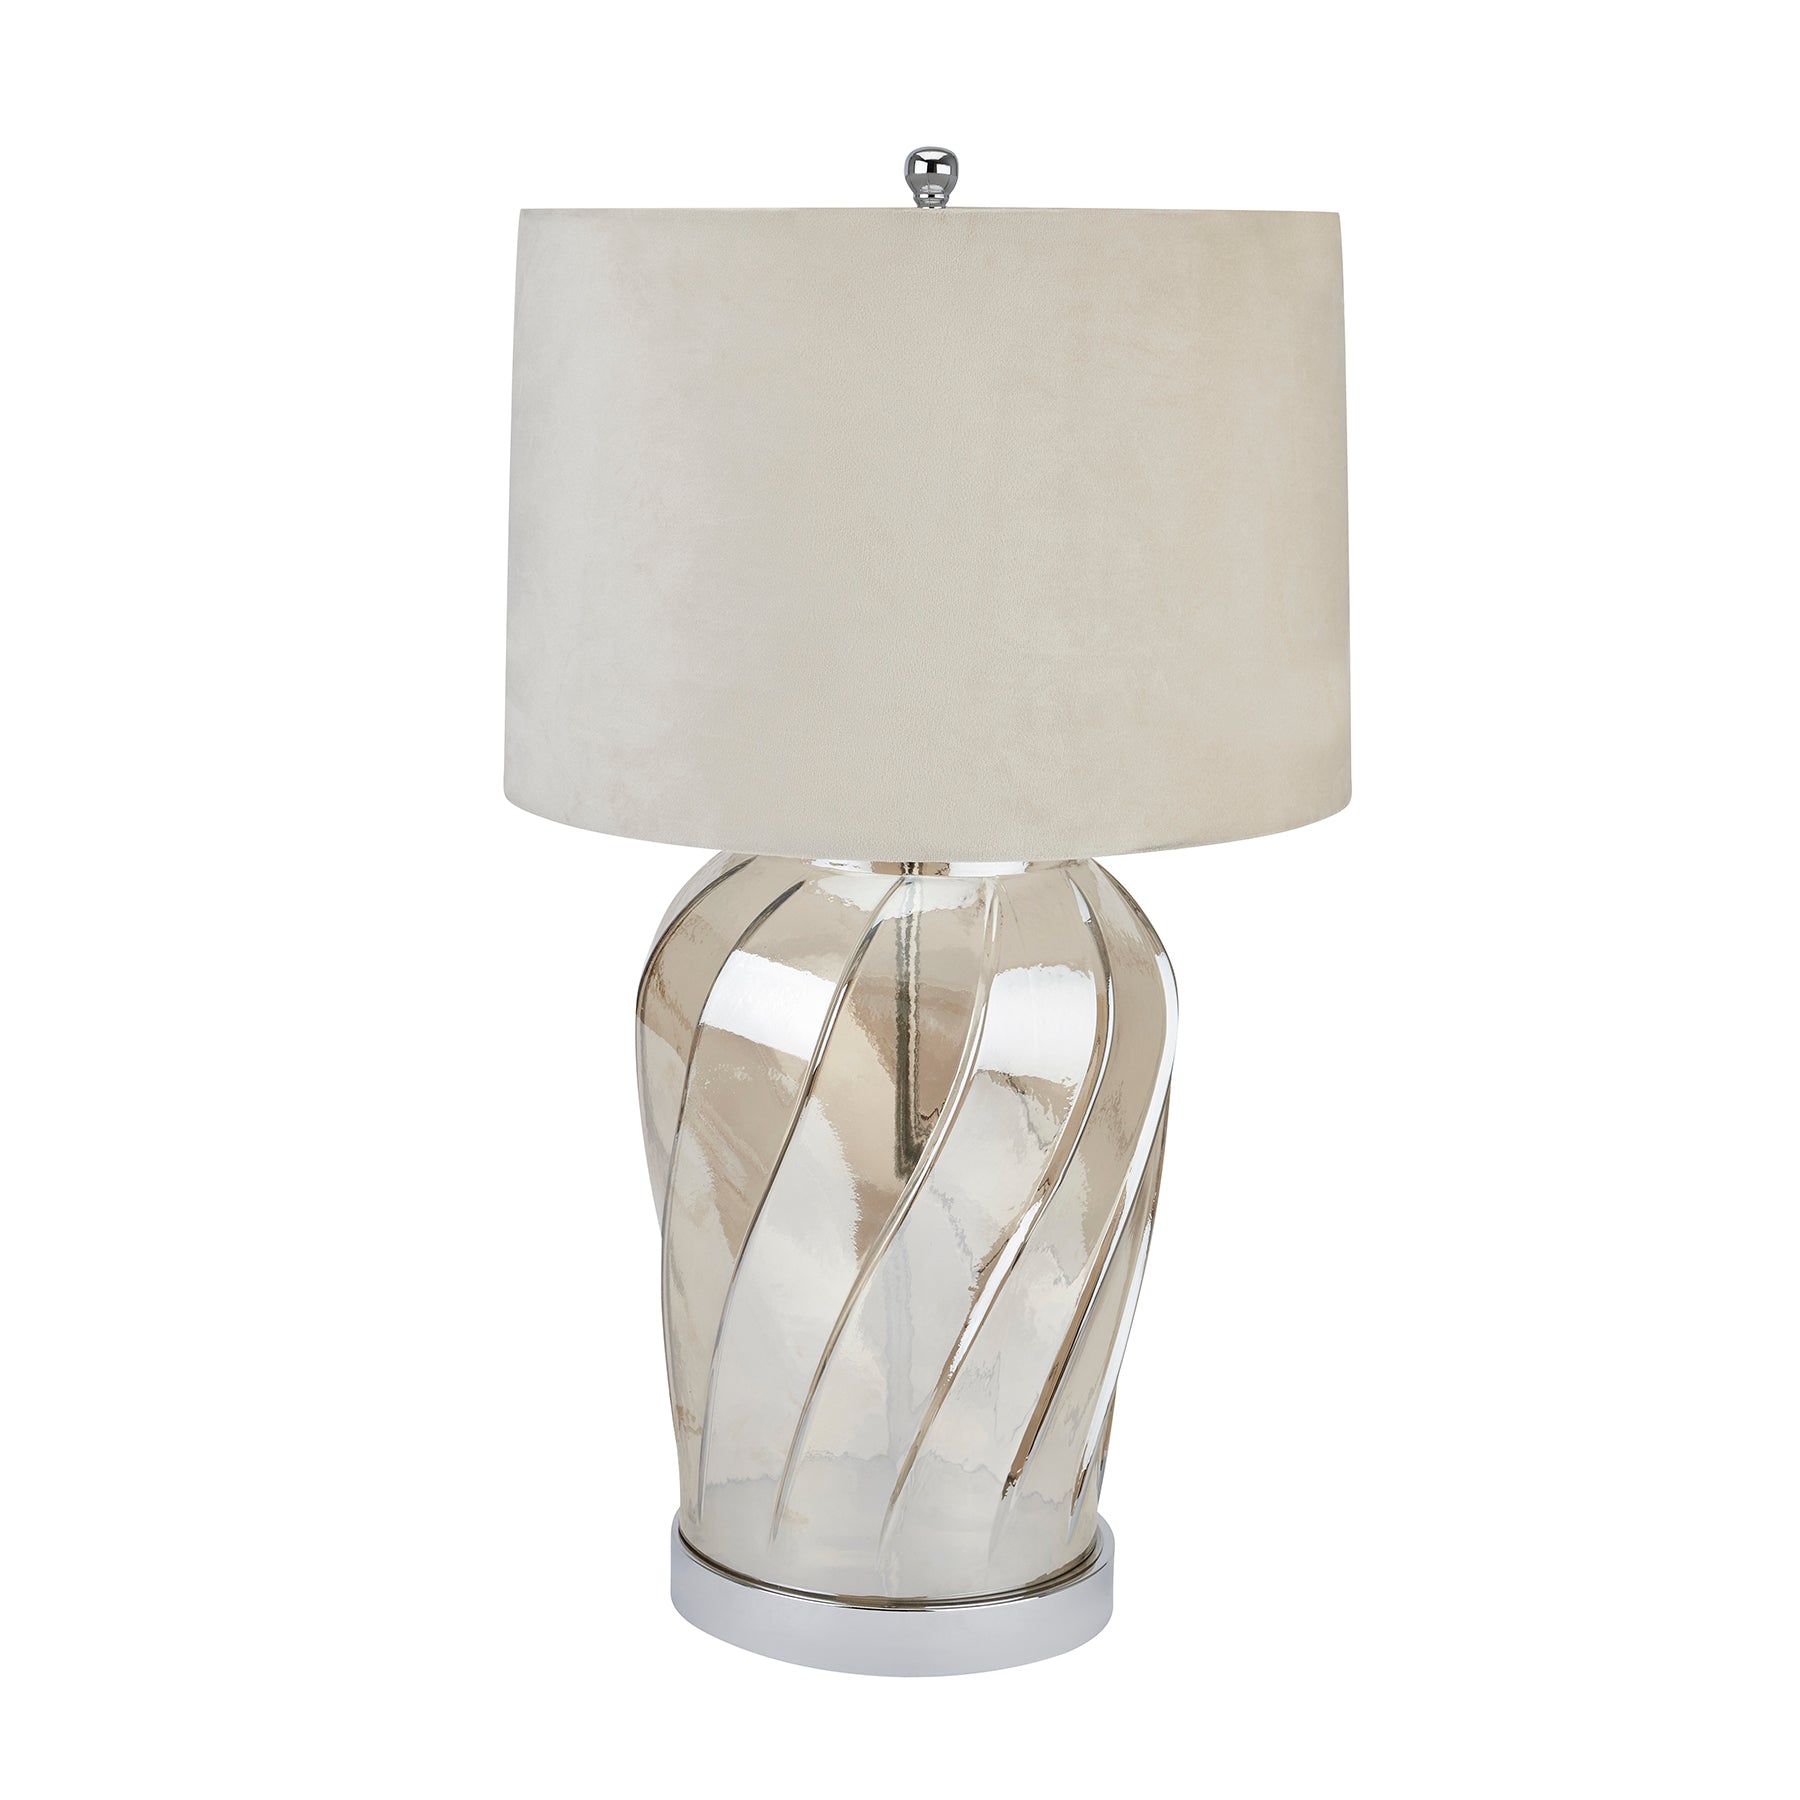 Hill Interiors Table Lamp Ambassador Metallic Glass Lamp With Velvet Shade